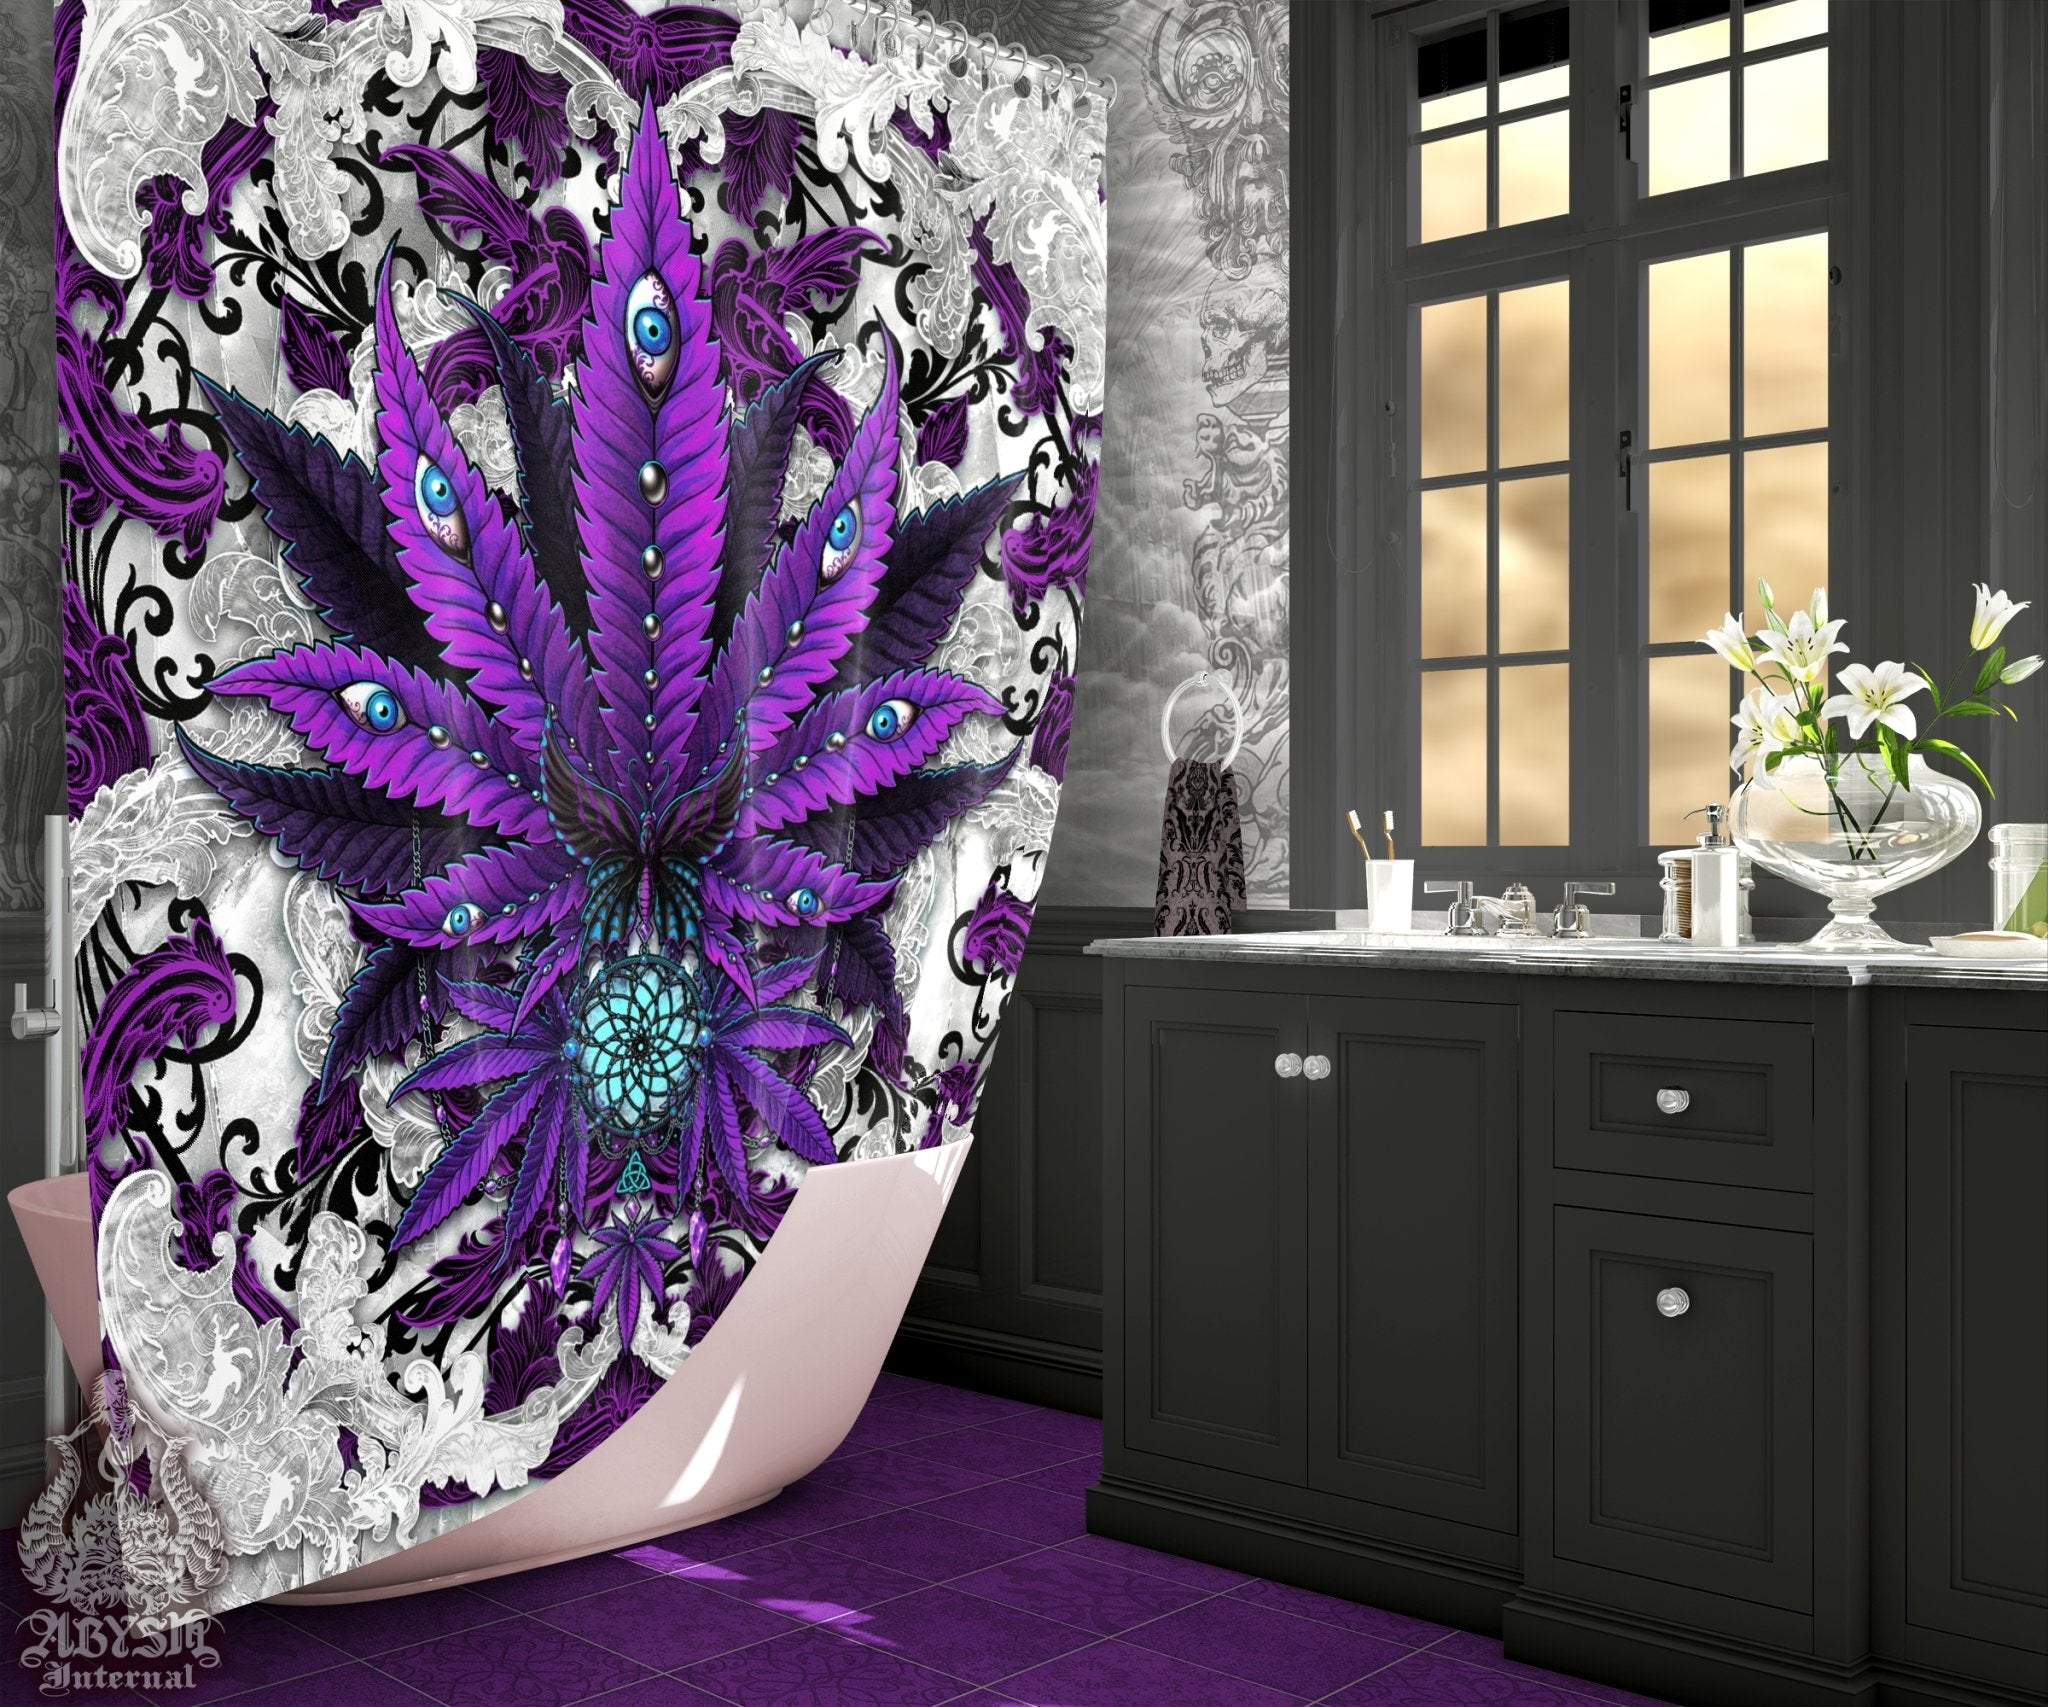 Weed Shower Curtain, Gothic Bathroom Decor, Indie Cannabis Print, Alternative 420 Home Art - Marijuana, Purple White Goth - Abysm Internal